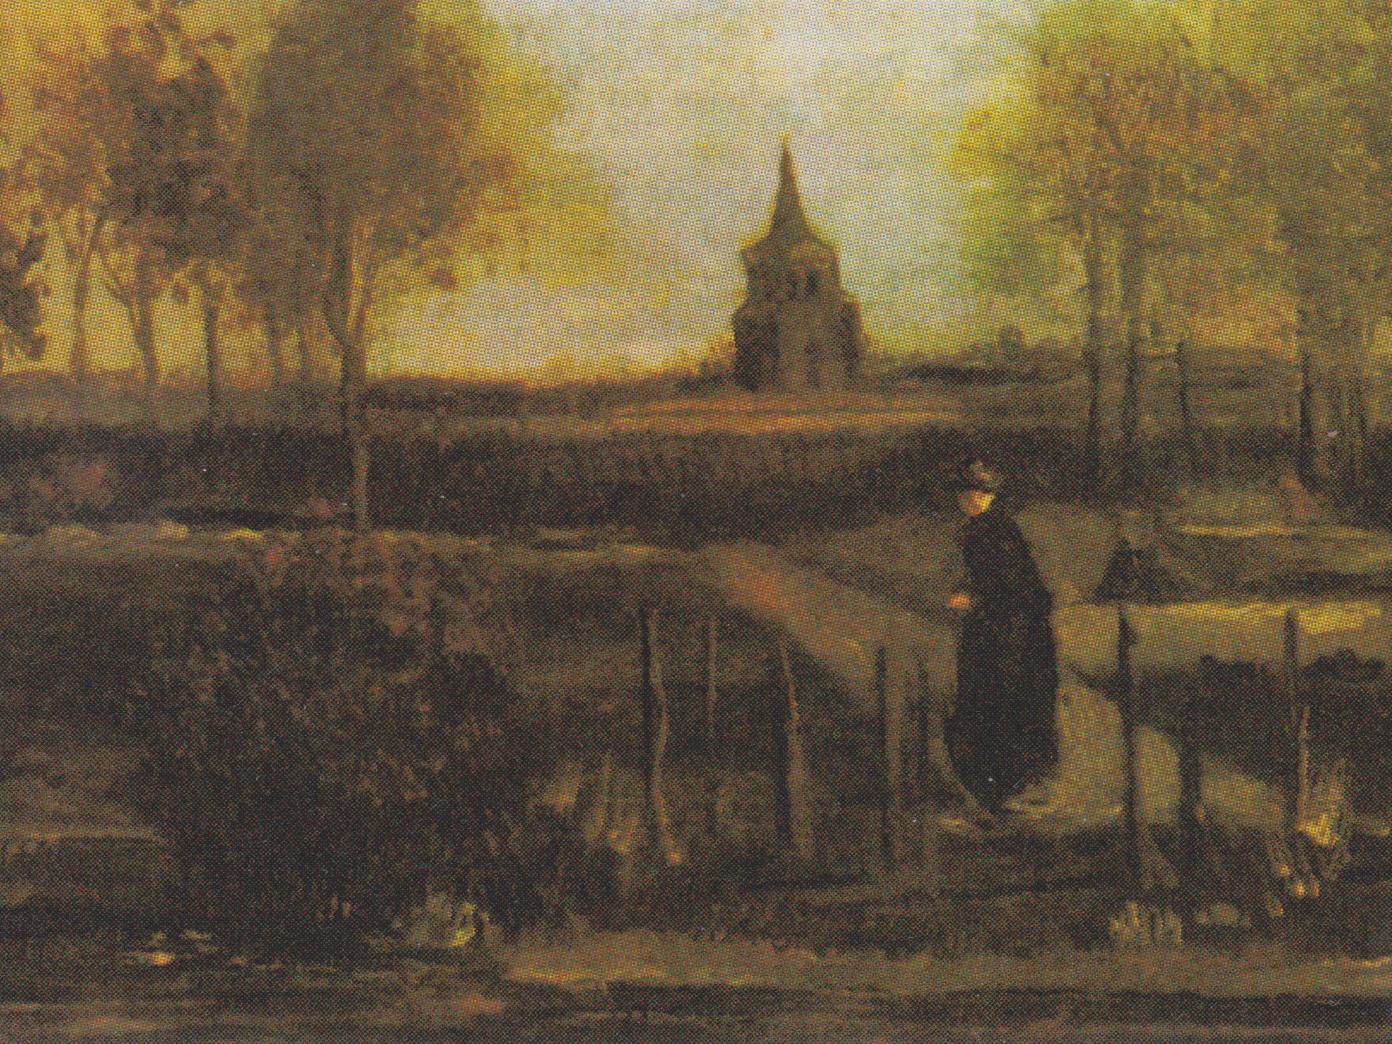 Van Gogh's Spring Garden: Stolen masterpiece now missing from Netherlands gallery